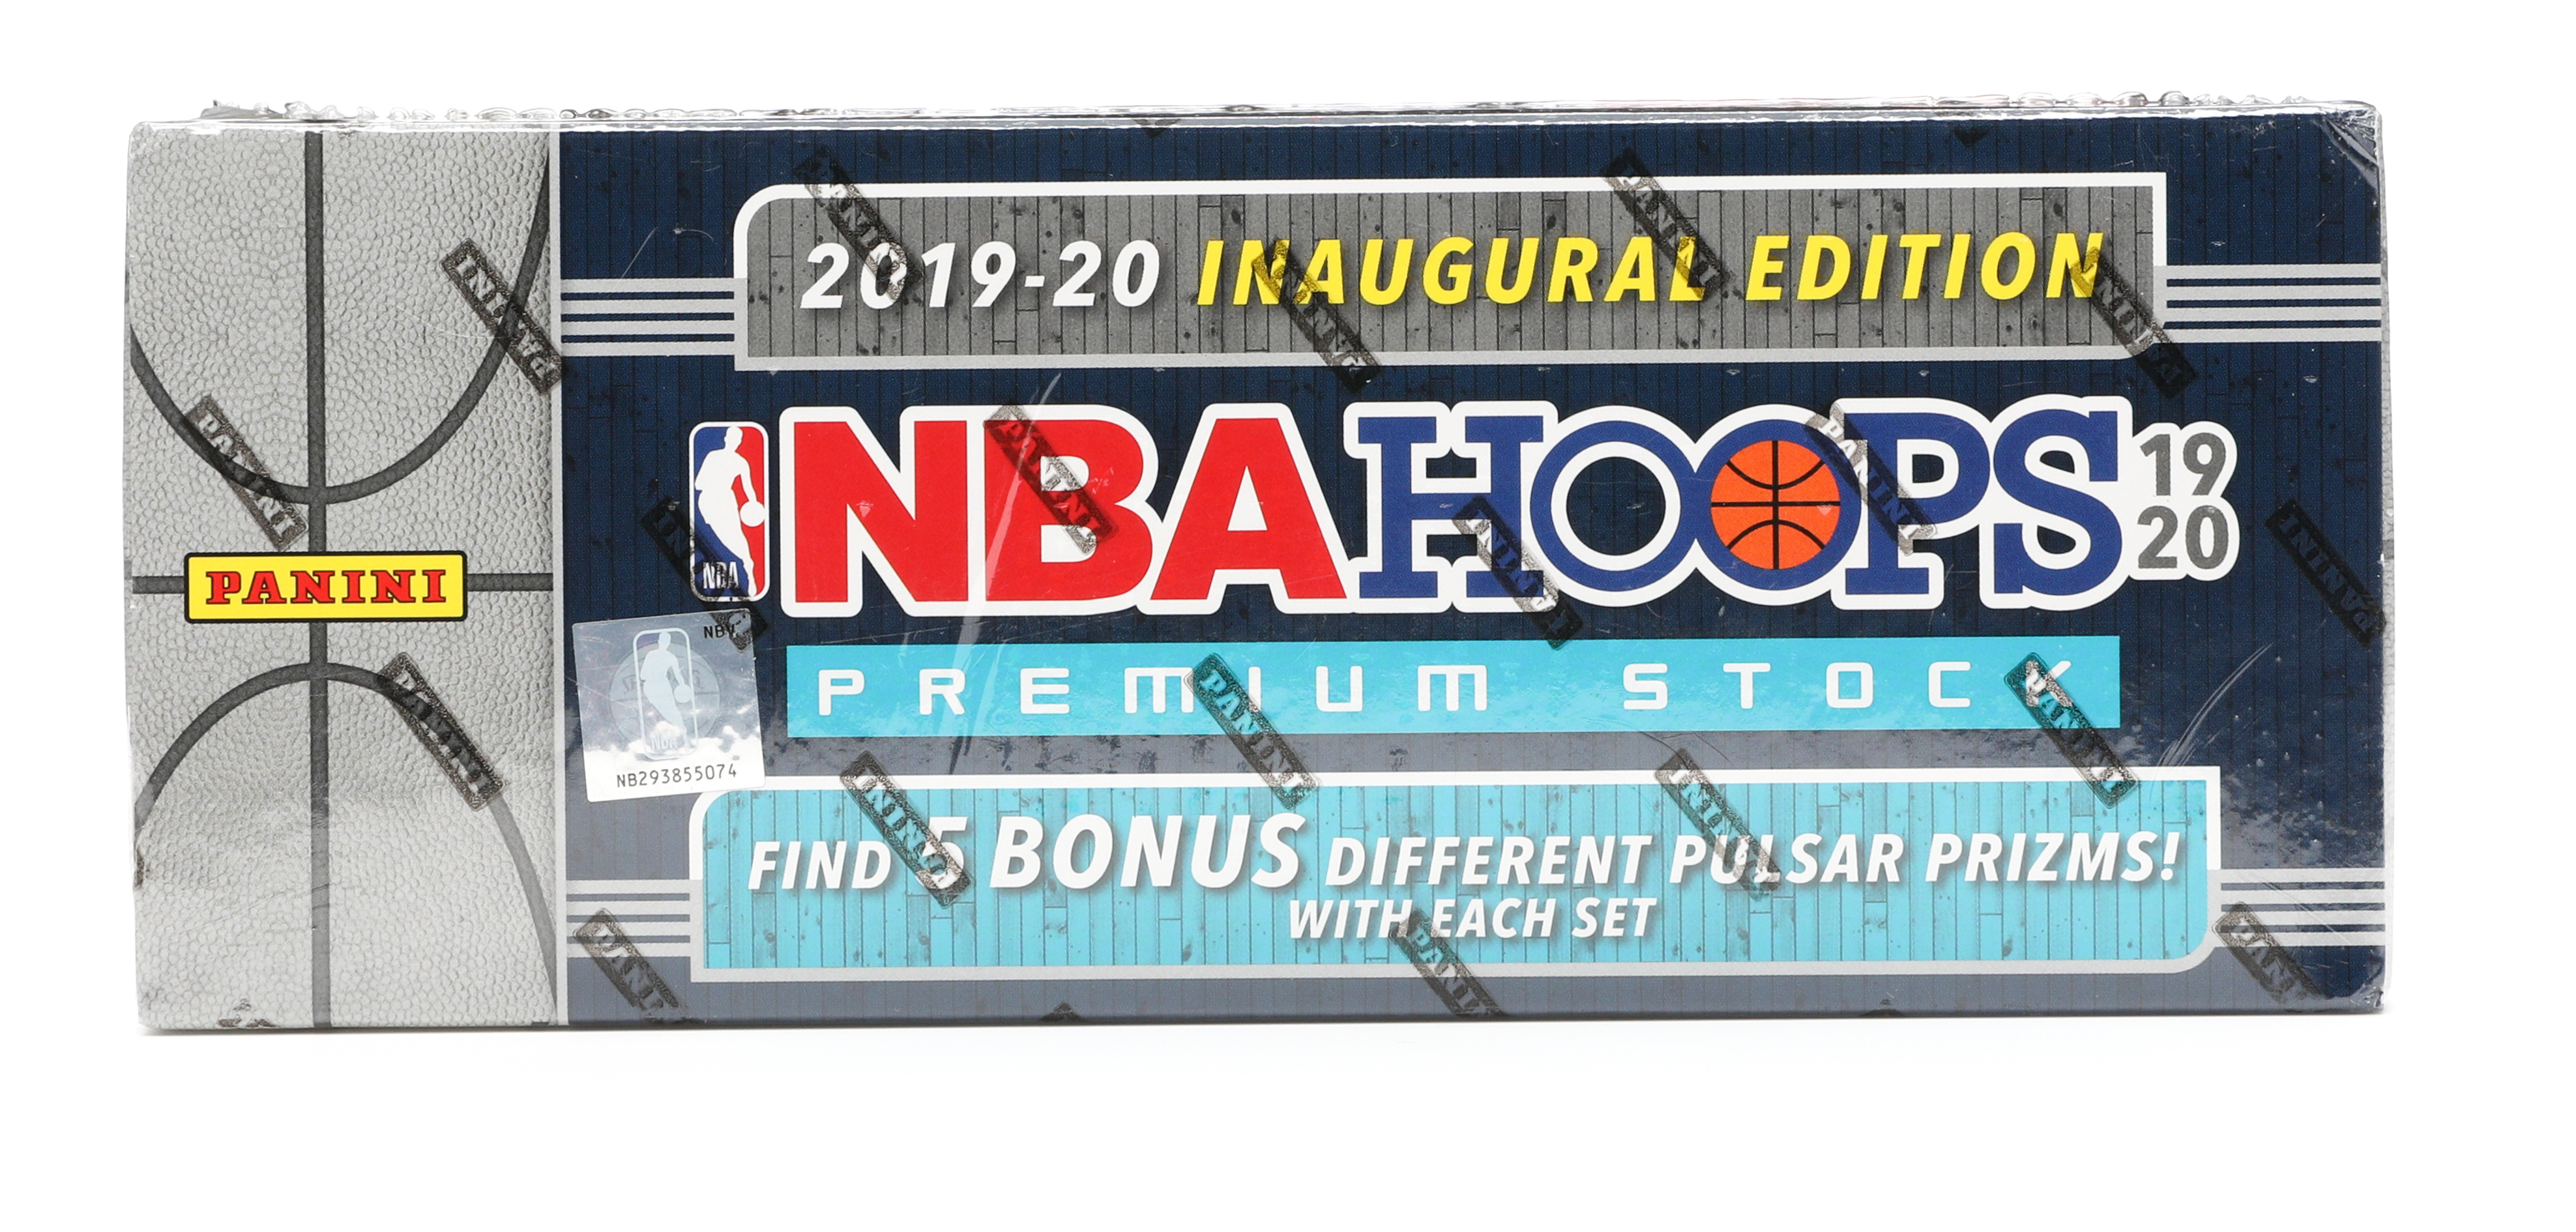 2019-20 Panini NBA Hoops Premium Stock Box Set